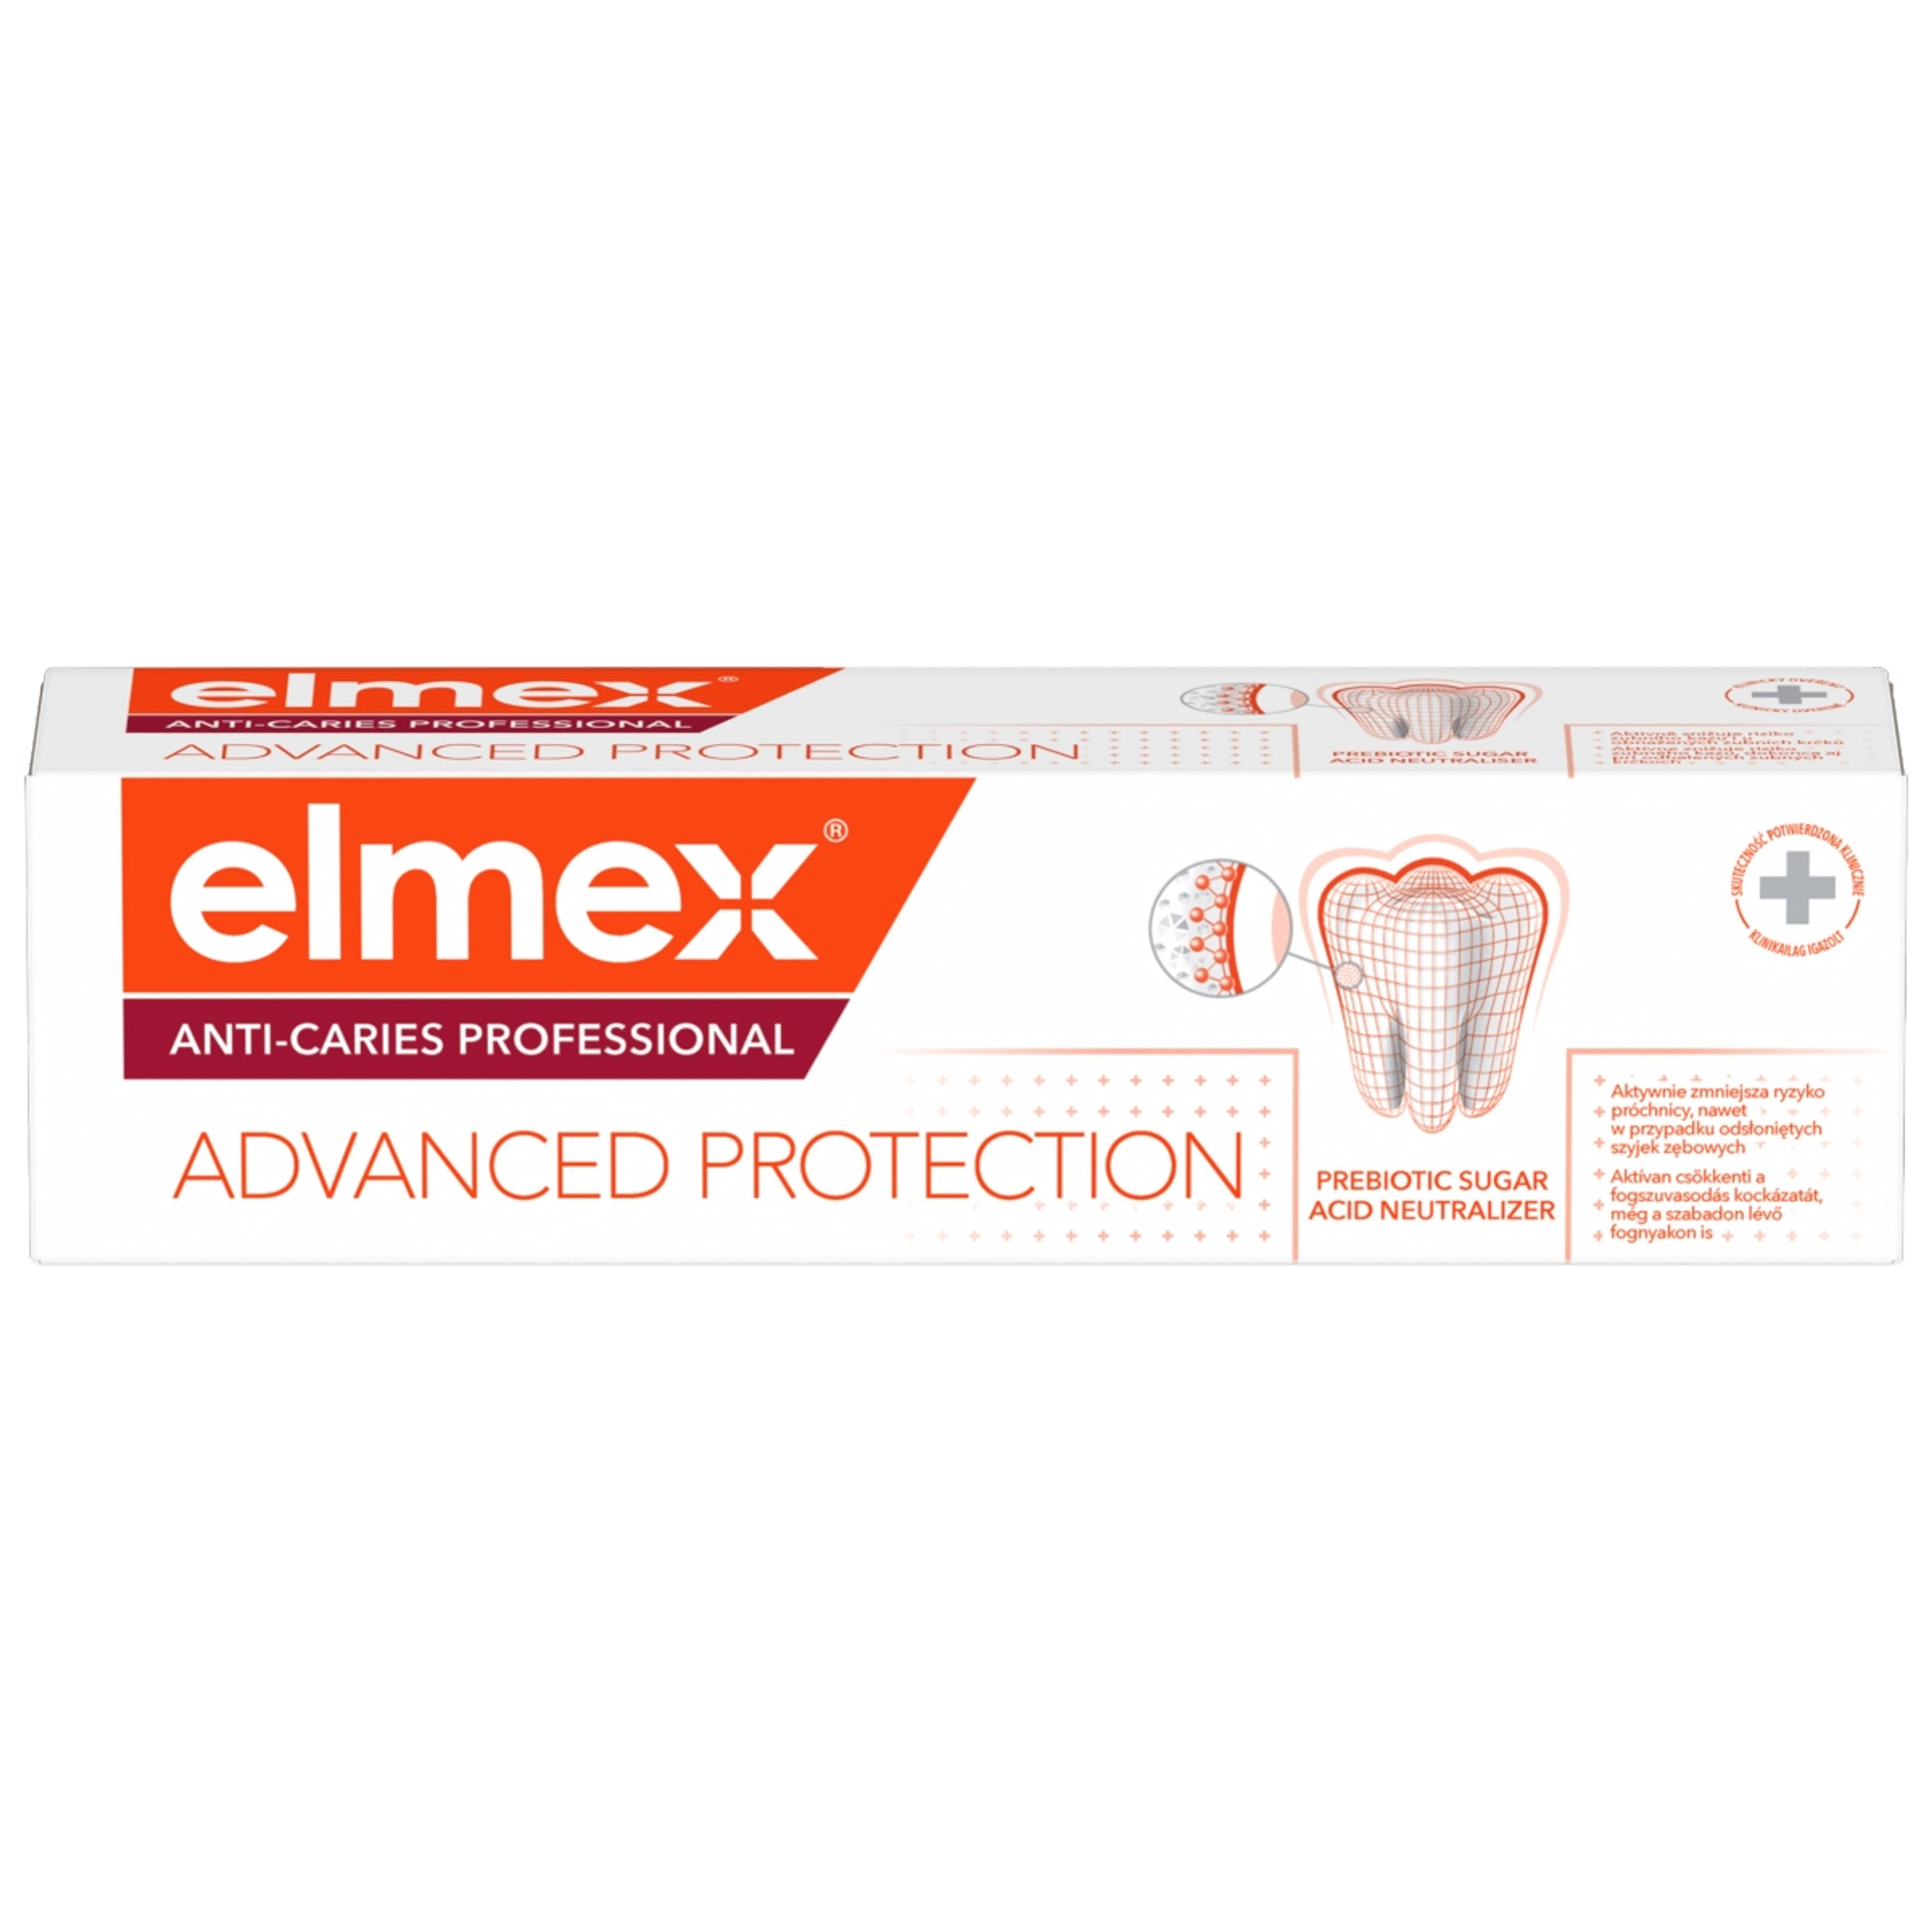 Elmex Anti-Caries Protection Professional fogkrém fogkrém - 75 ml